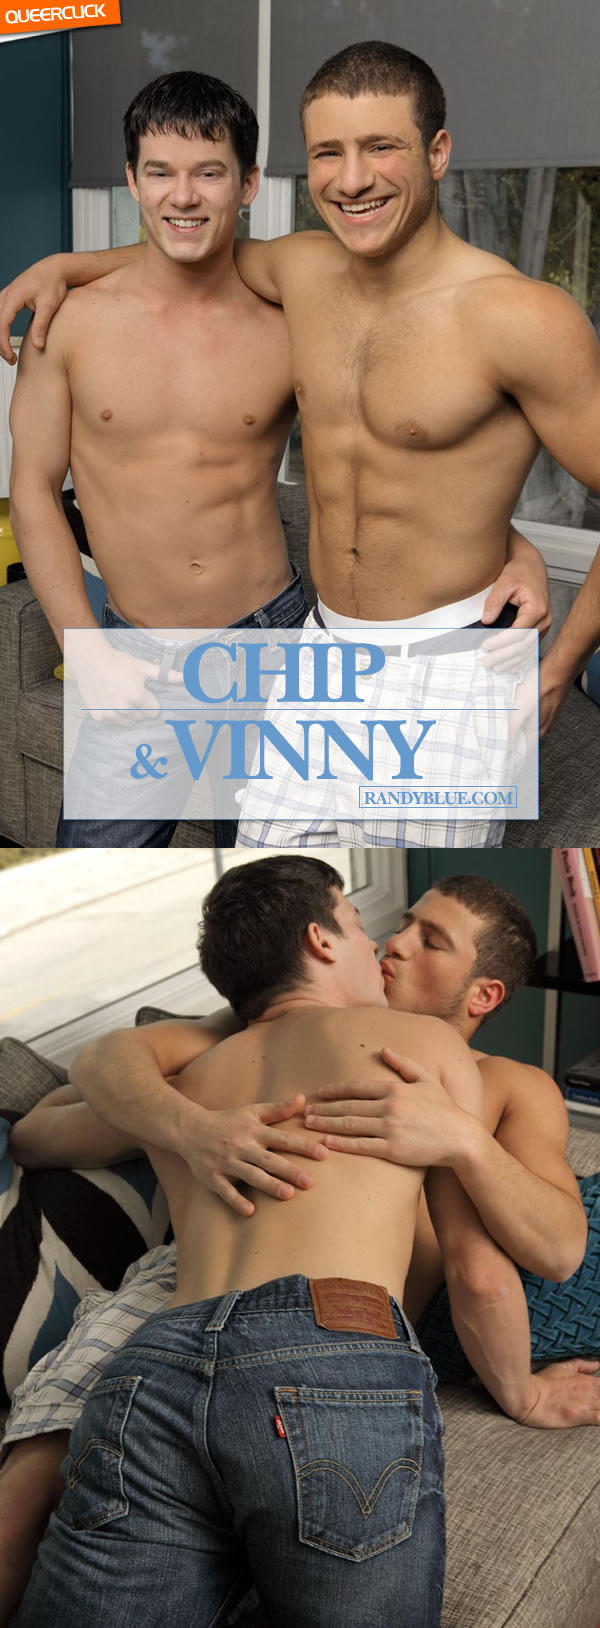 Randy Blue: Chip & Vinny